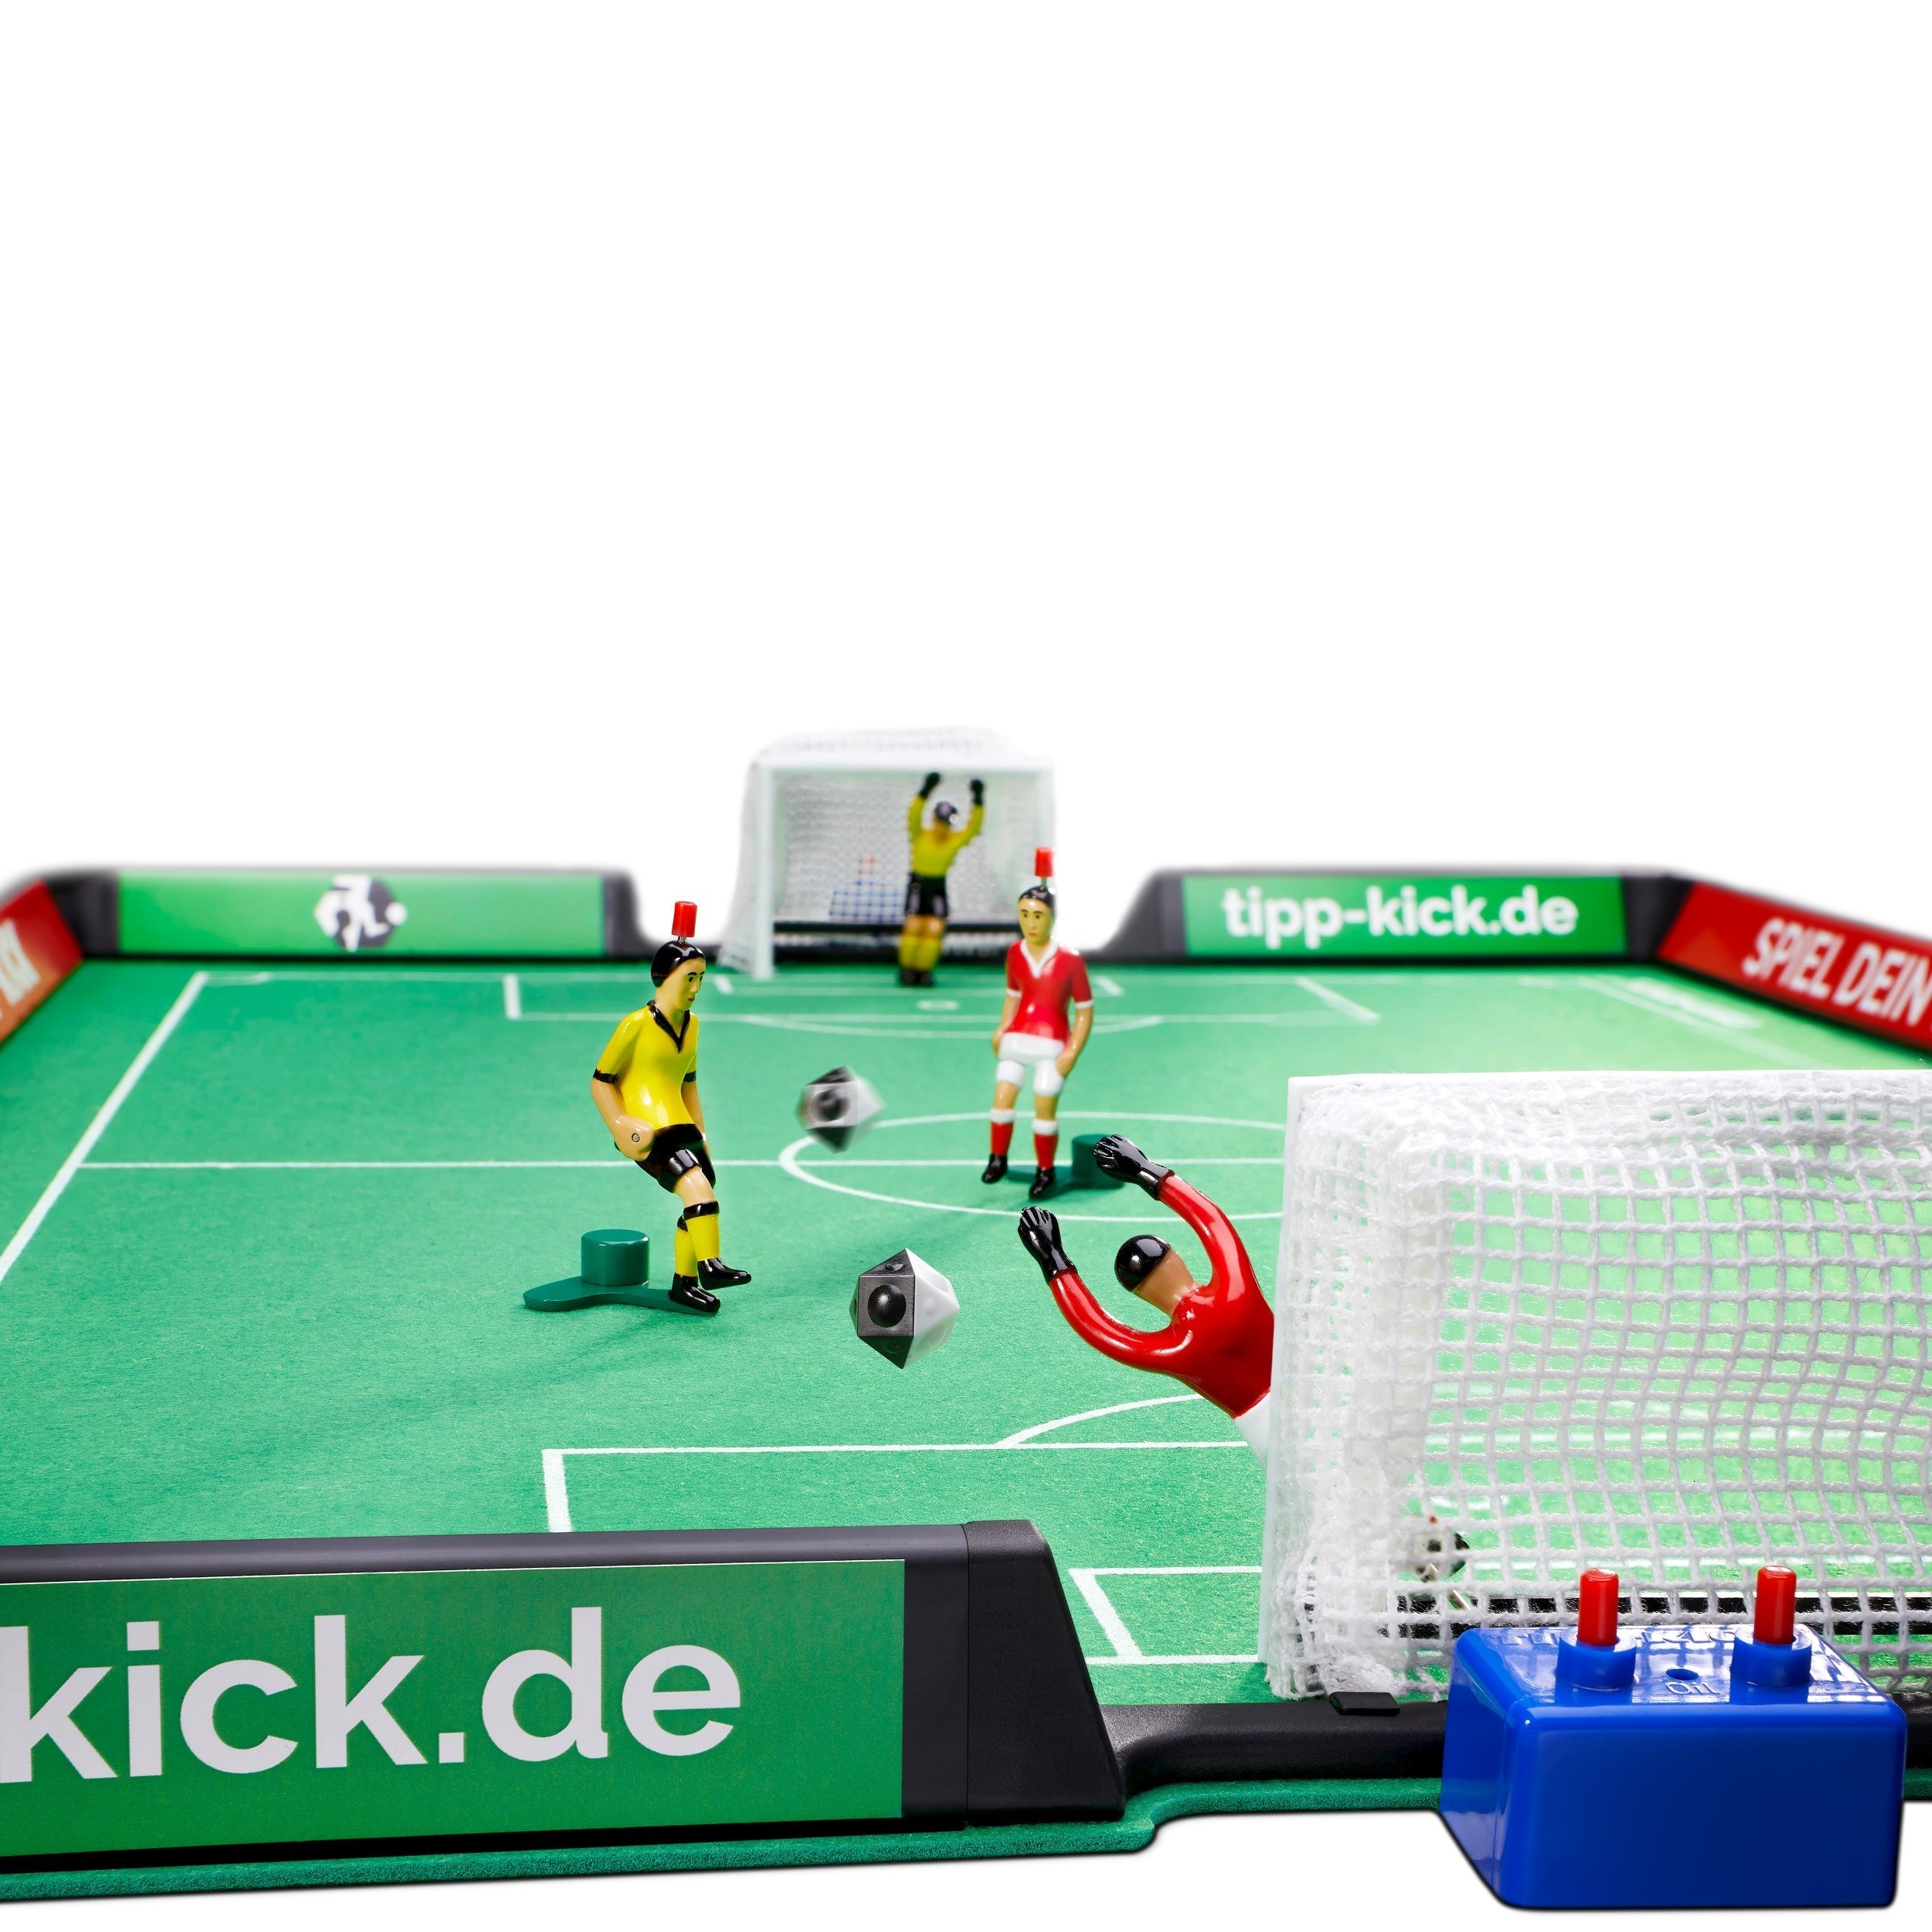 TIPP-KICK Set of 5 Balls for use with TIPP-KICK Soccer Game Sets